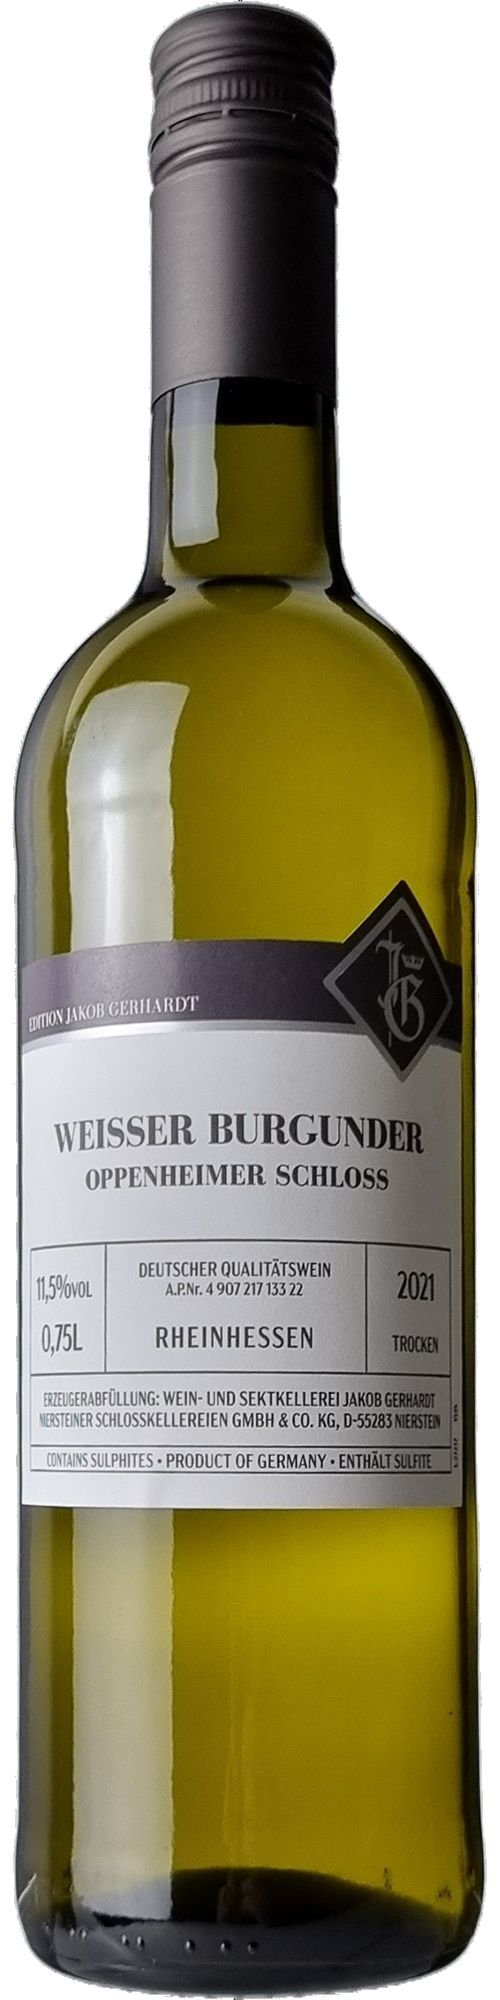 Oppenheimer Schloss Weisser Burgunder trocken